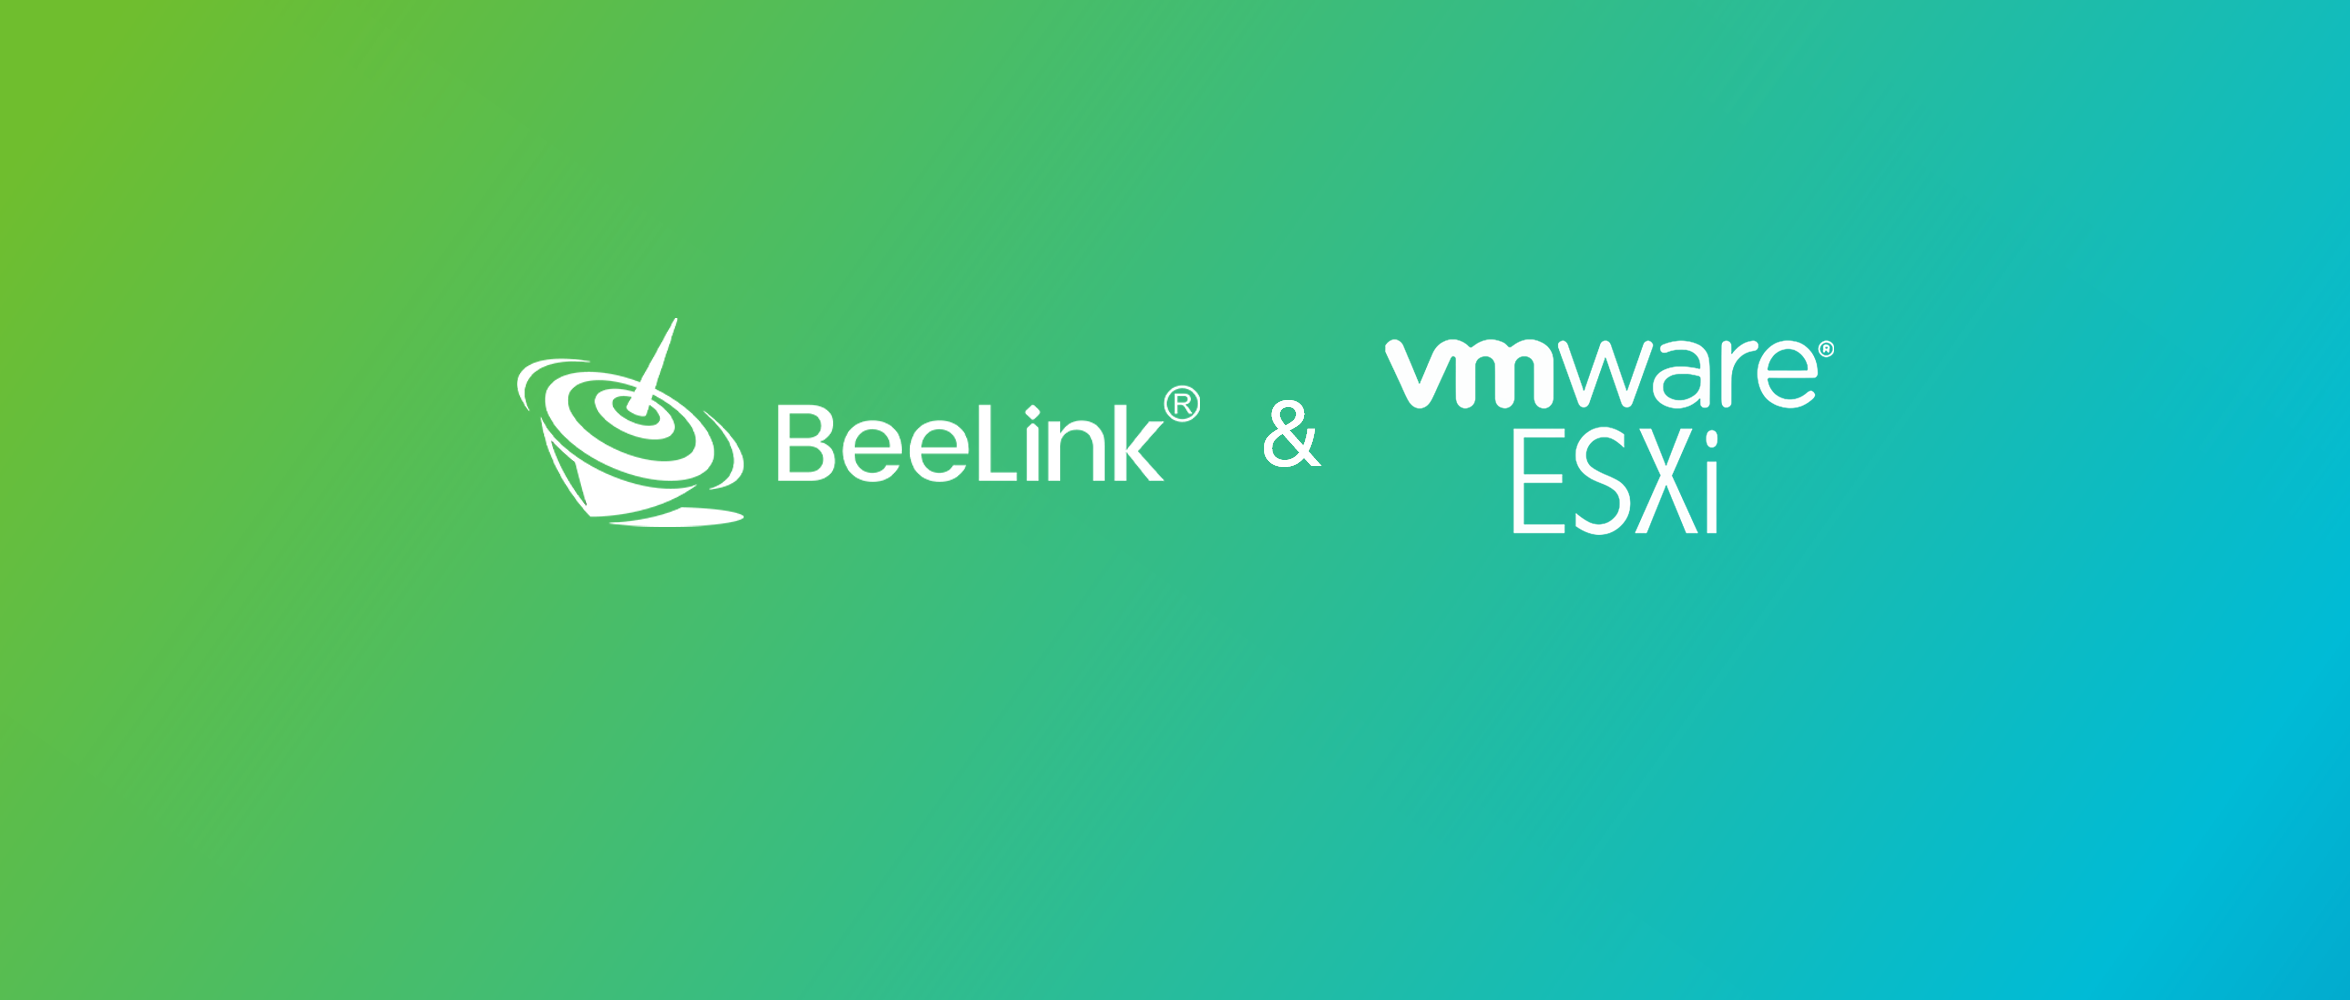 How to Install VMware ESXi on Beelink Mini PC